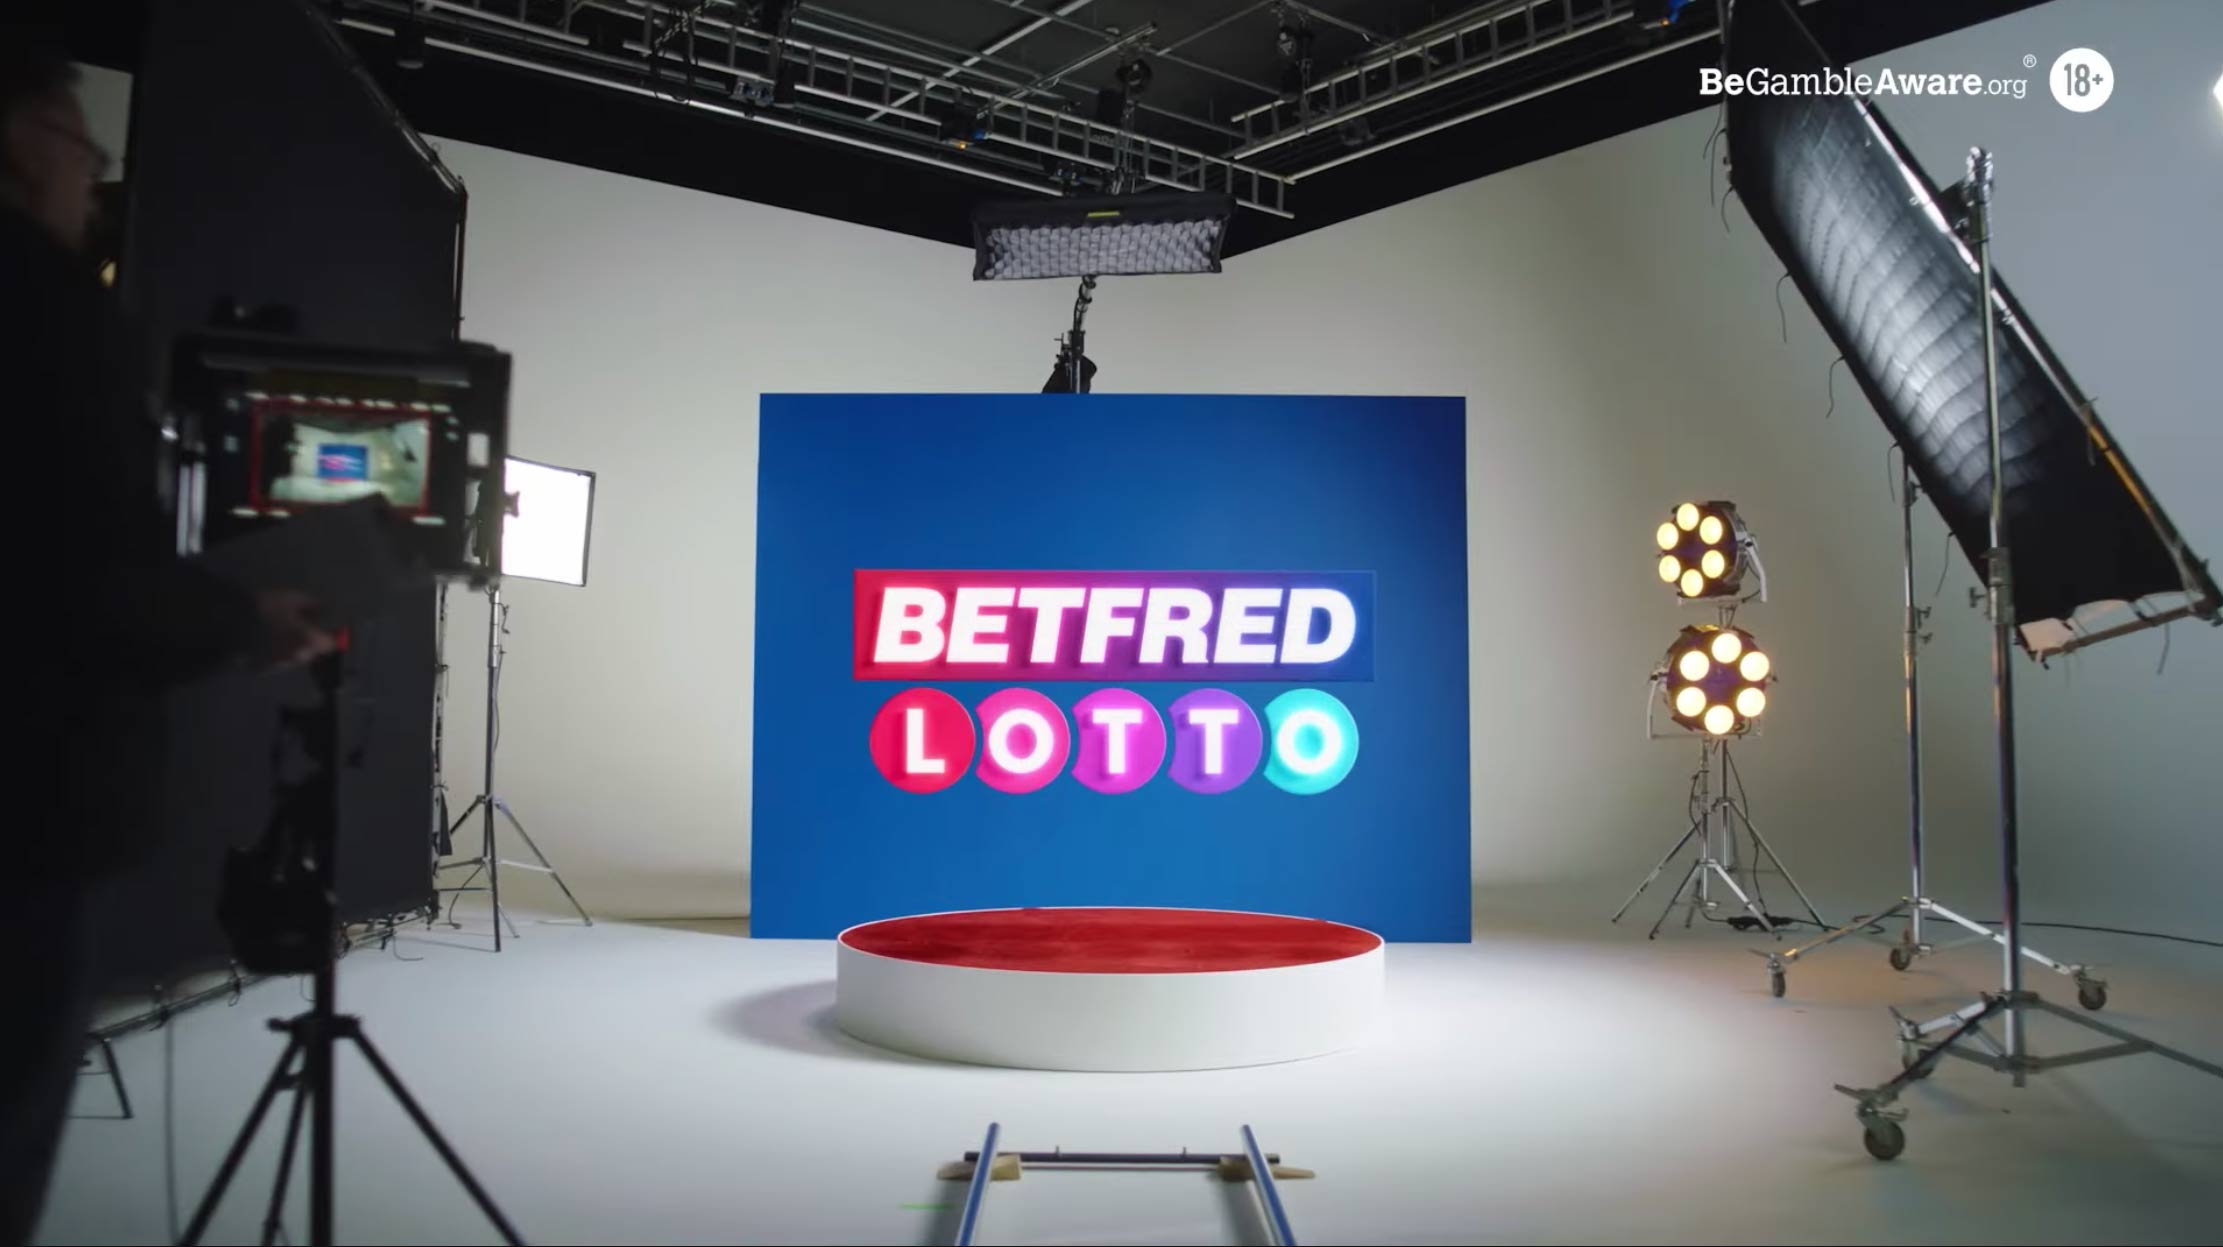 Betfred Lotto TV Ad